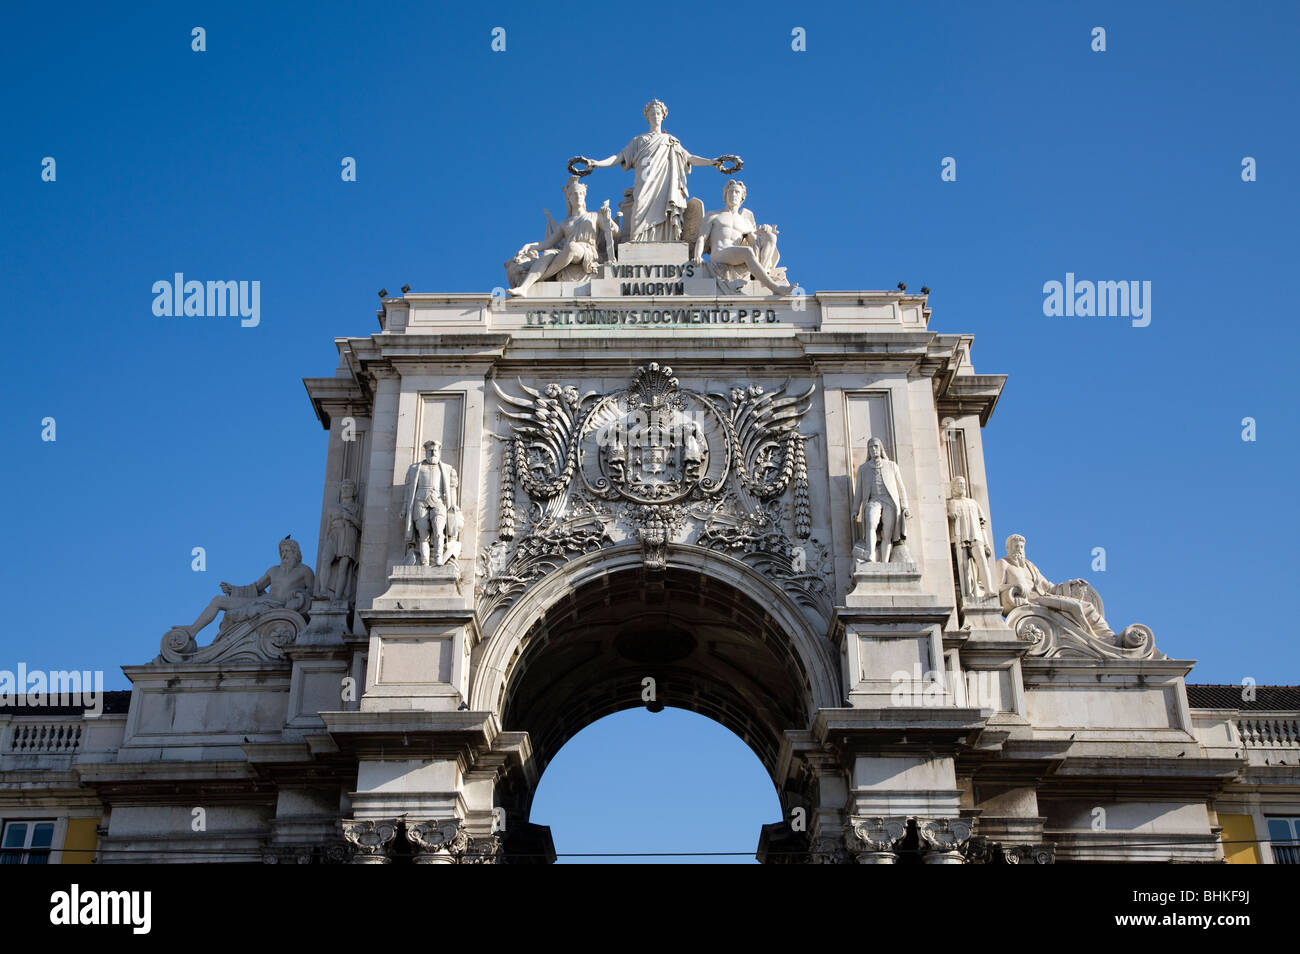 Portugal, Lisbon Arch of augusta. Portugese name Arco da Rua Augusta Stock Photo